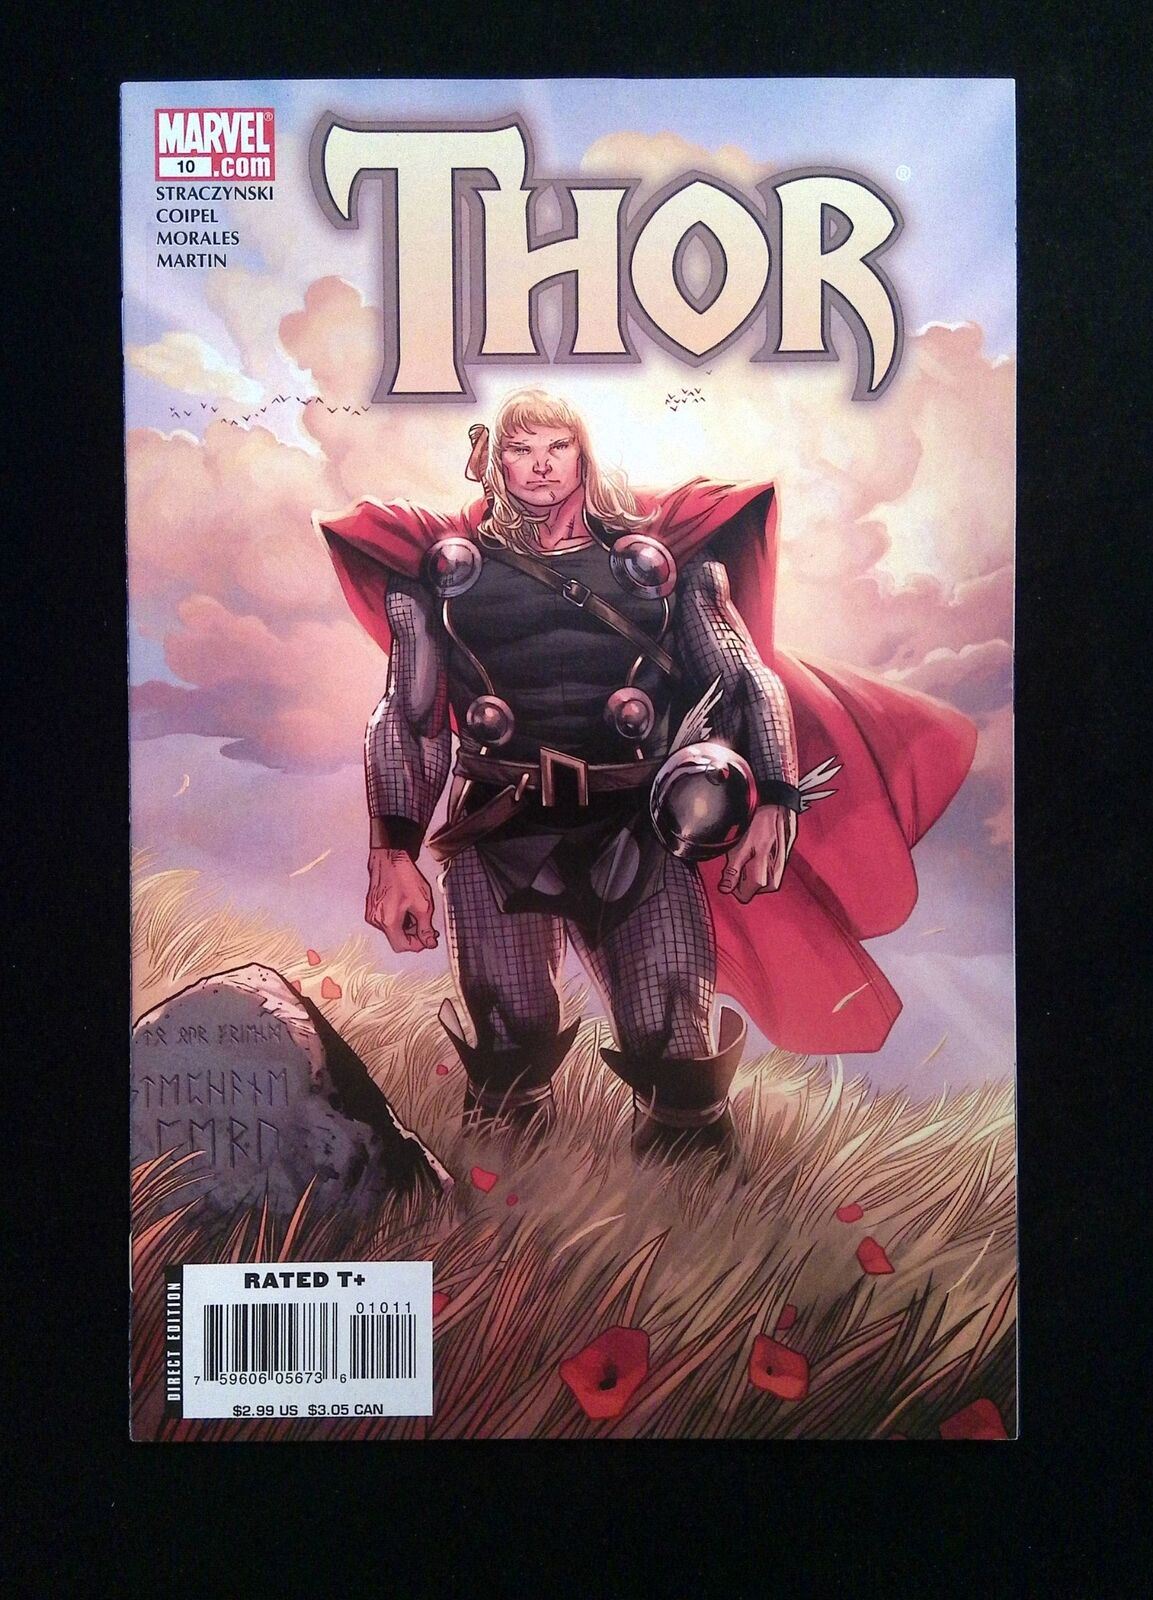 Thor #10 (3RD SERIES) MARVEL Comics 2008 NM